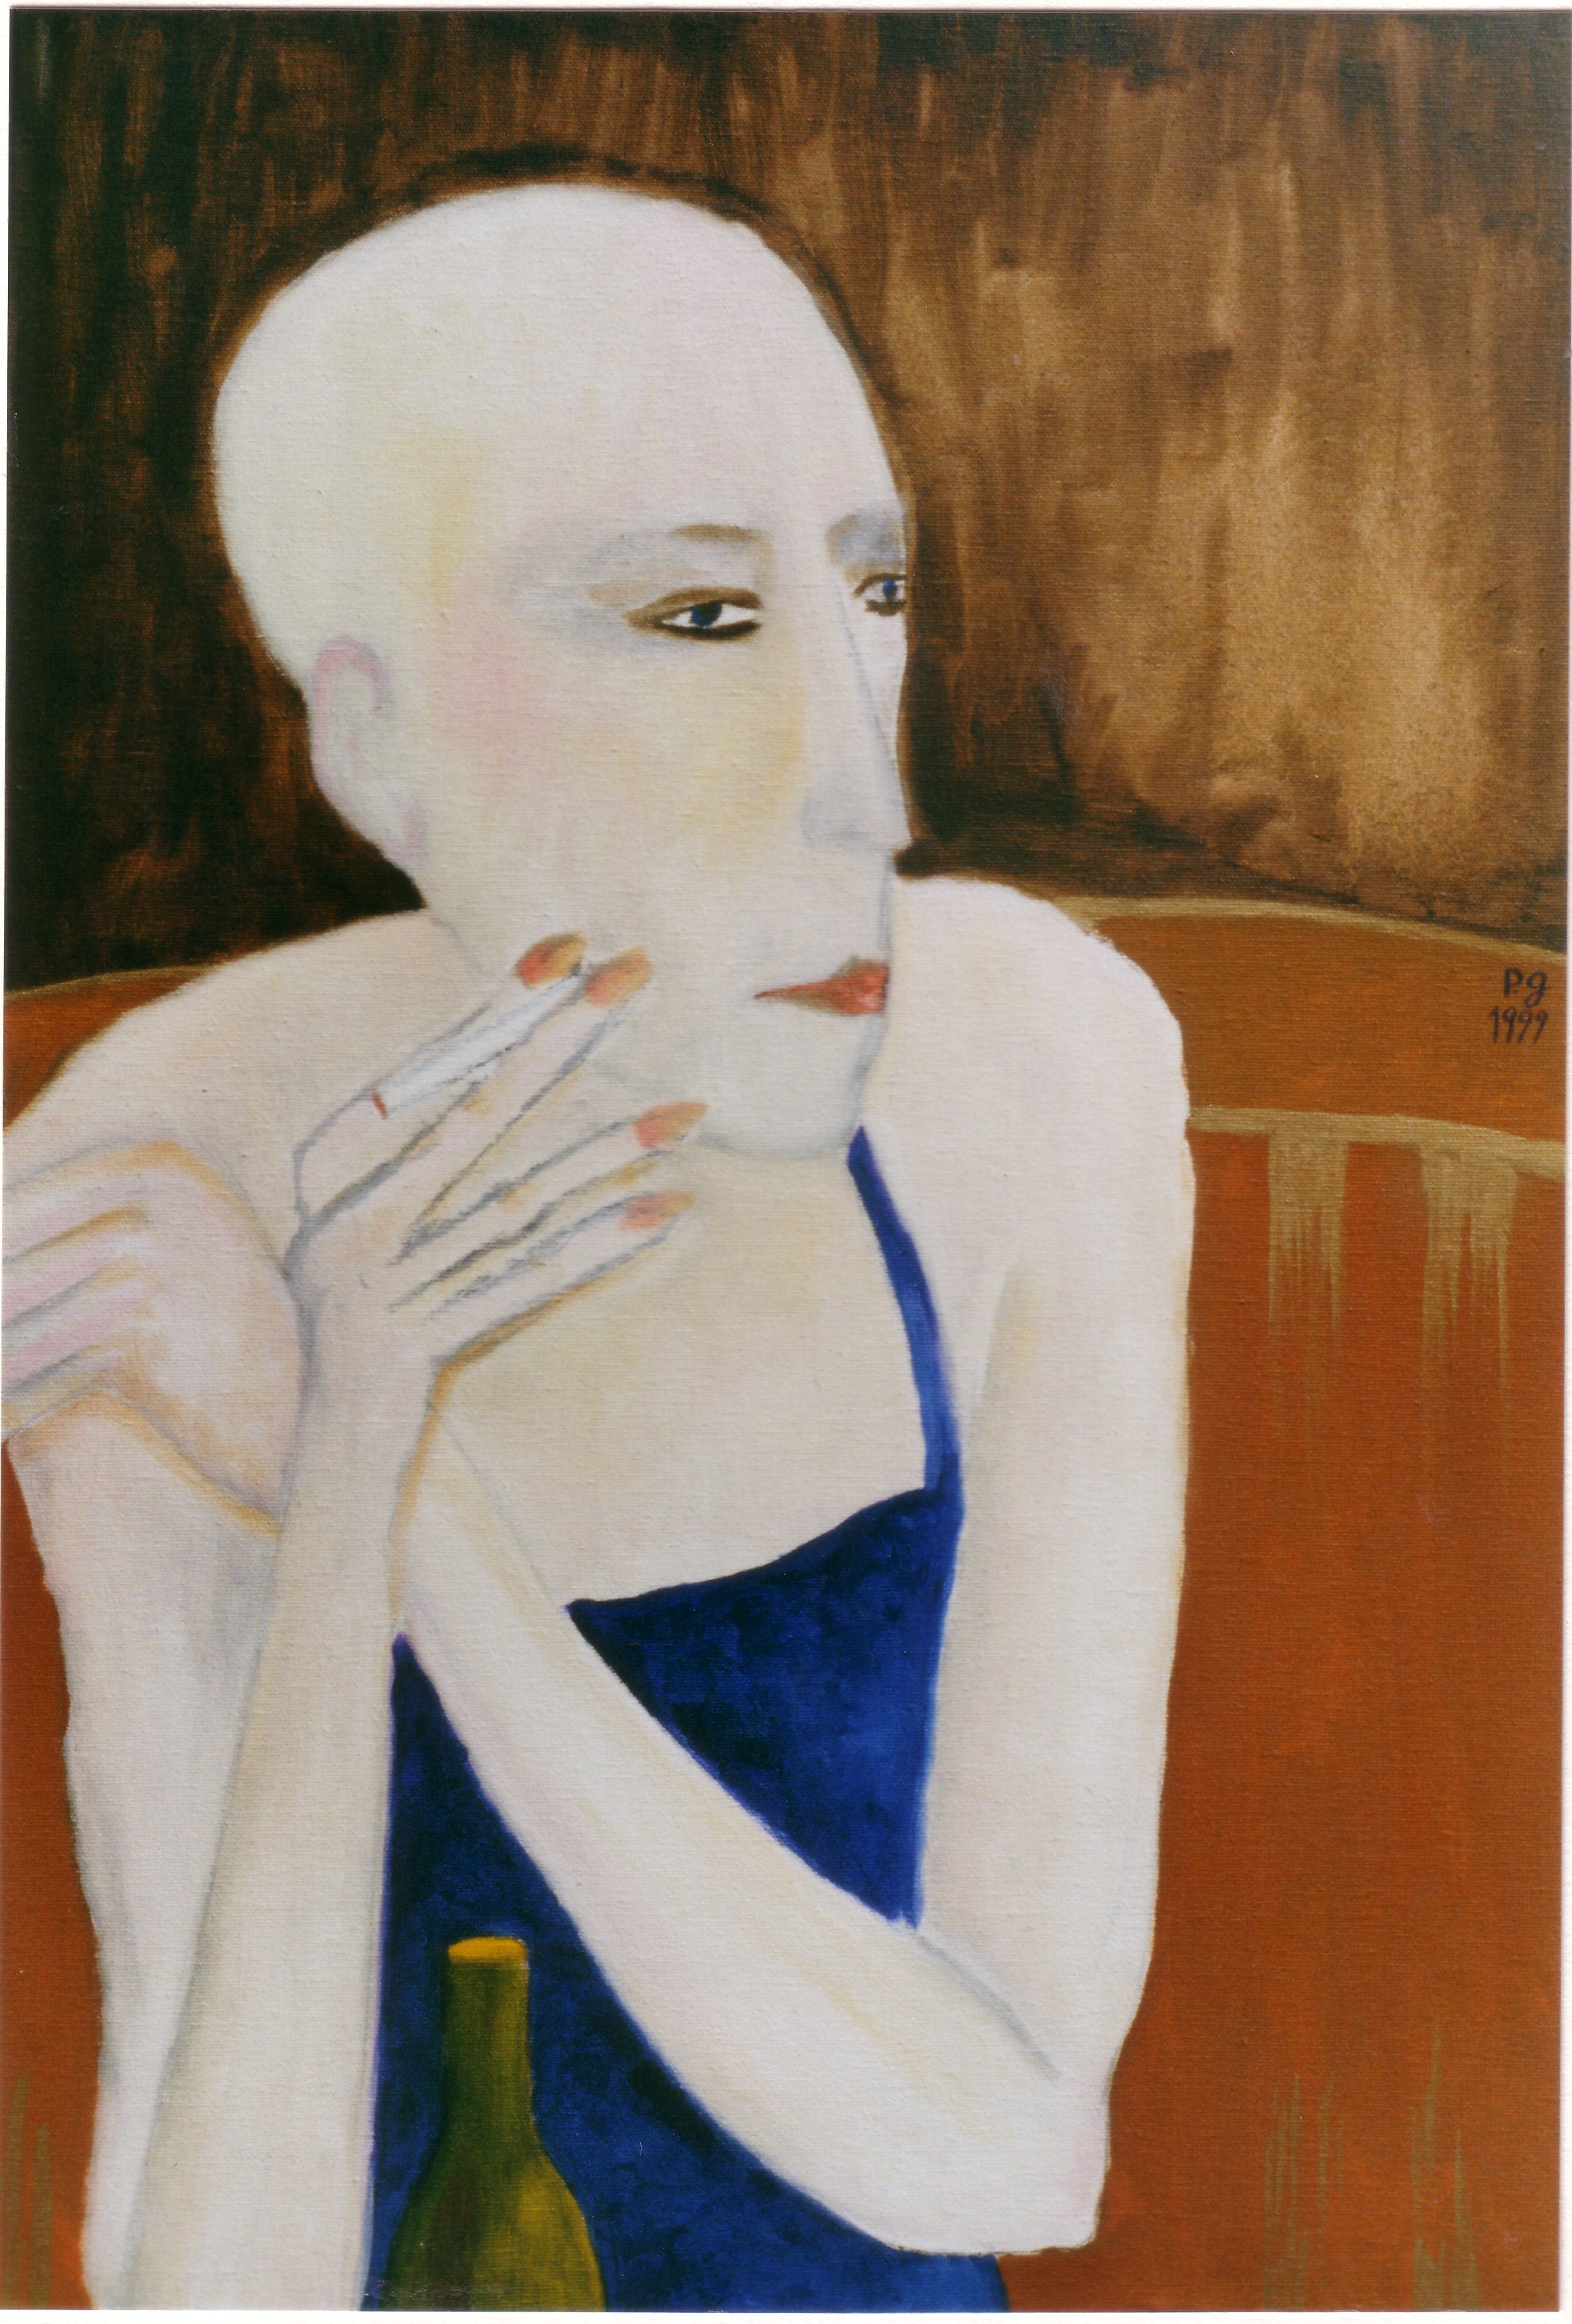 patrick gourgouillat - "Femme fumant" - 1999